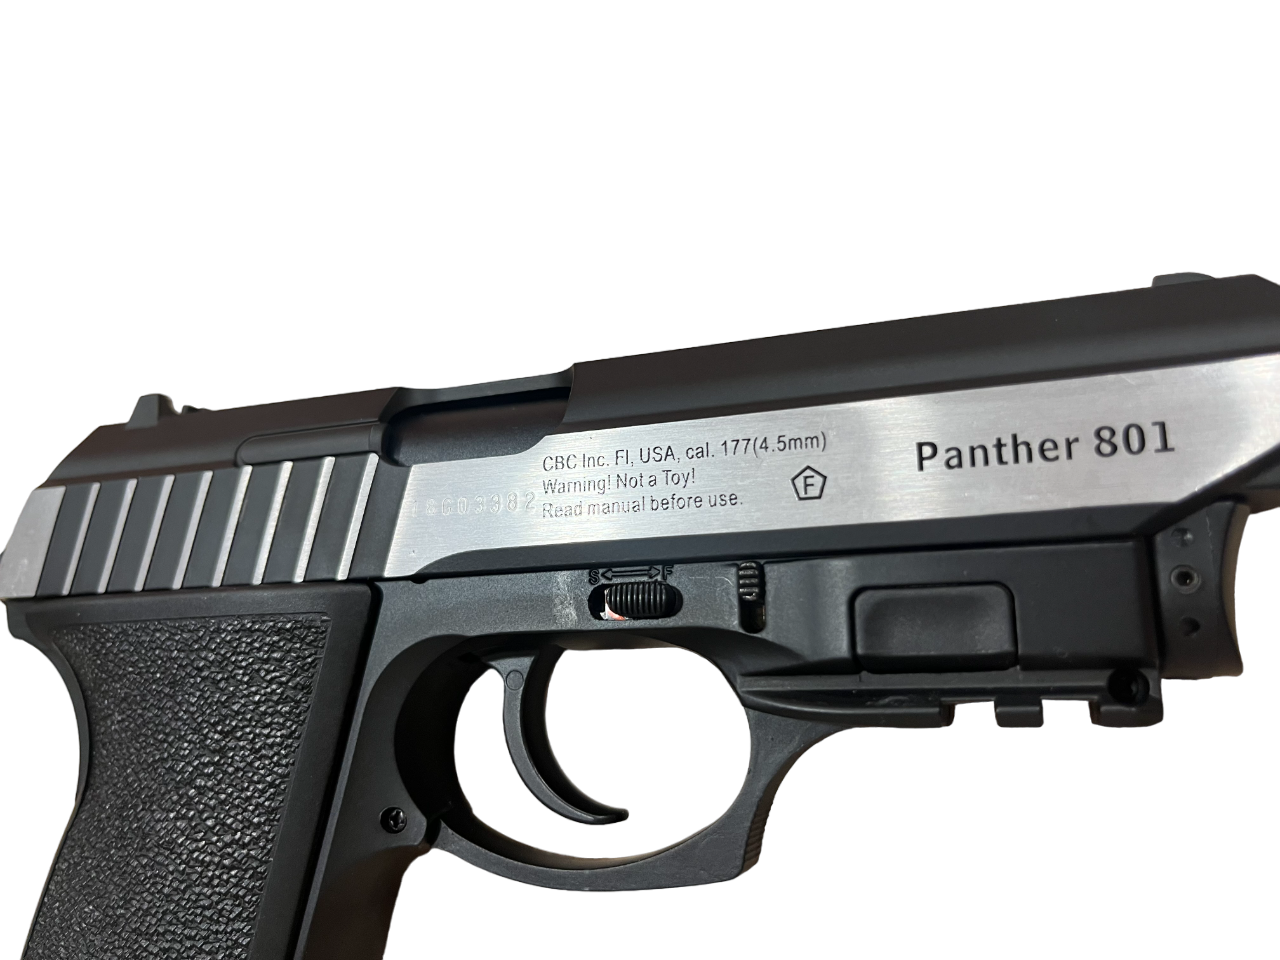 Borner 4.5mm/.177 Panther 801 with Red Laser Inbuilt (Metal – Dual Tone Black)